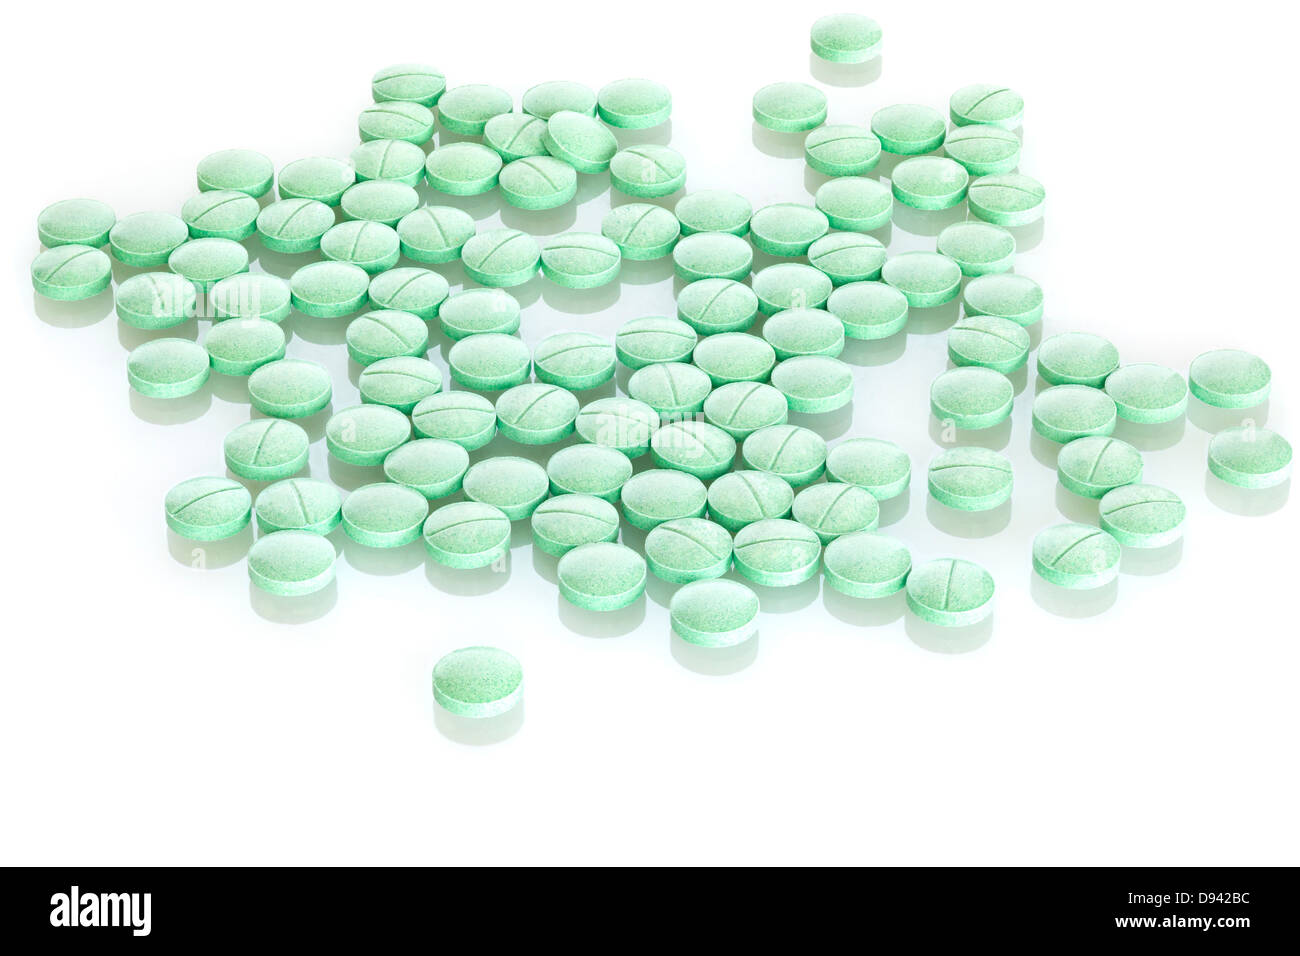 Tablets on White Background - green prescription pills on a white background. Front to back focus. Stock Photo